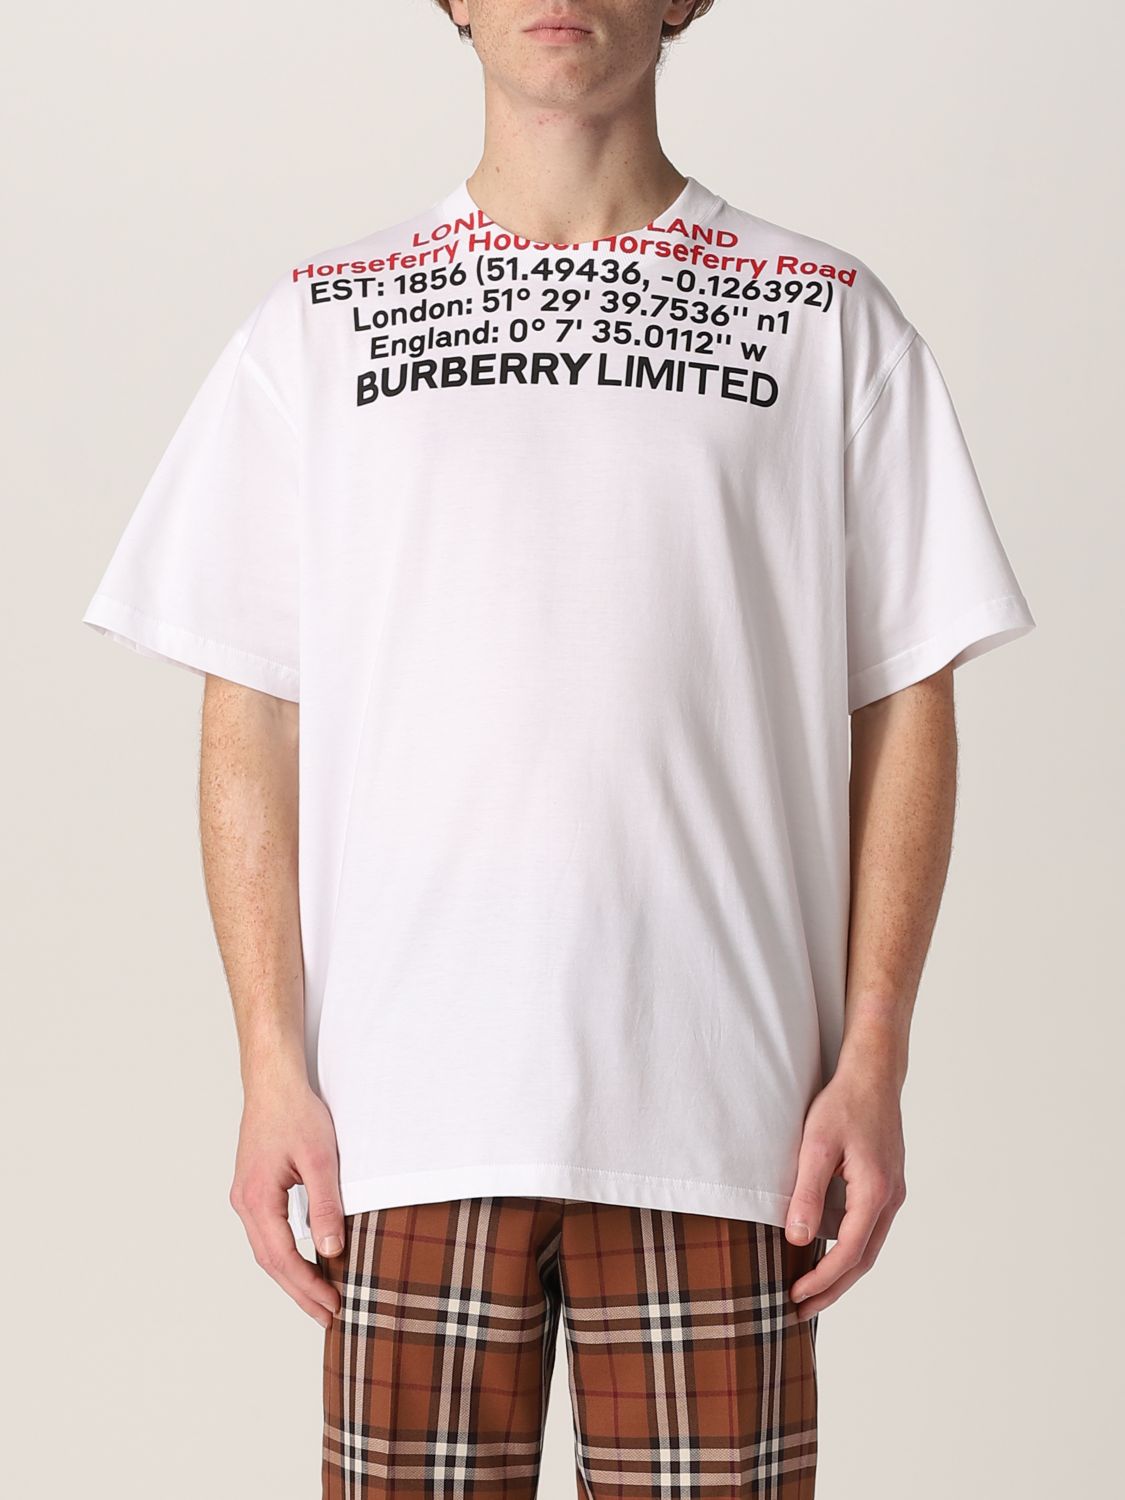 Tシャツ Burberry メンズ